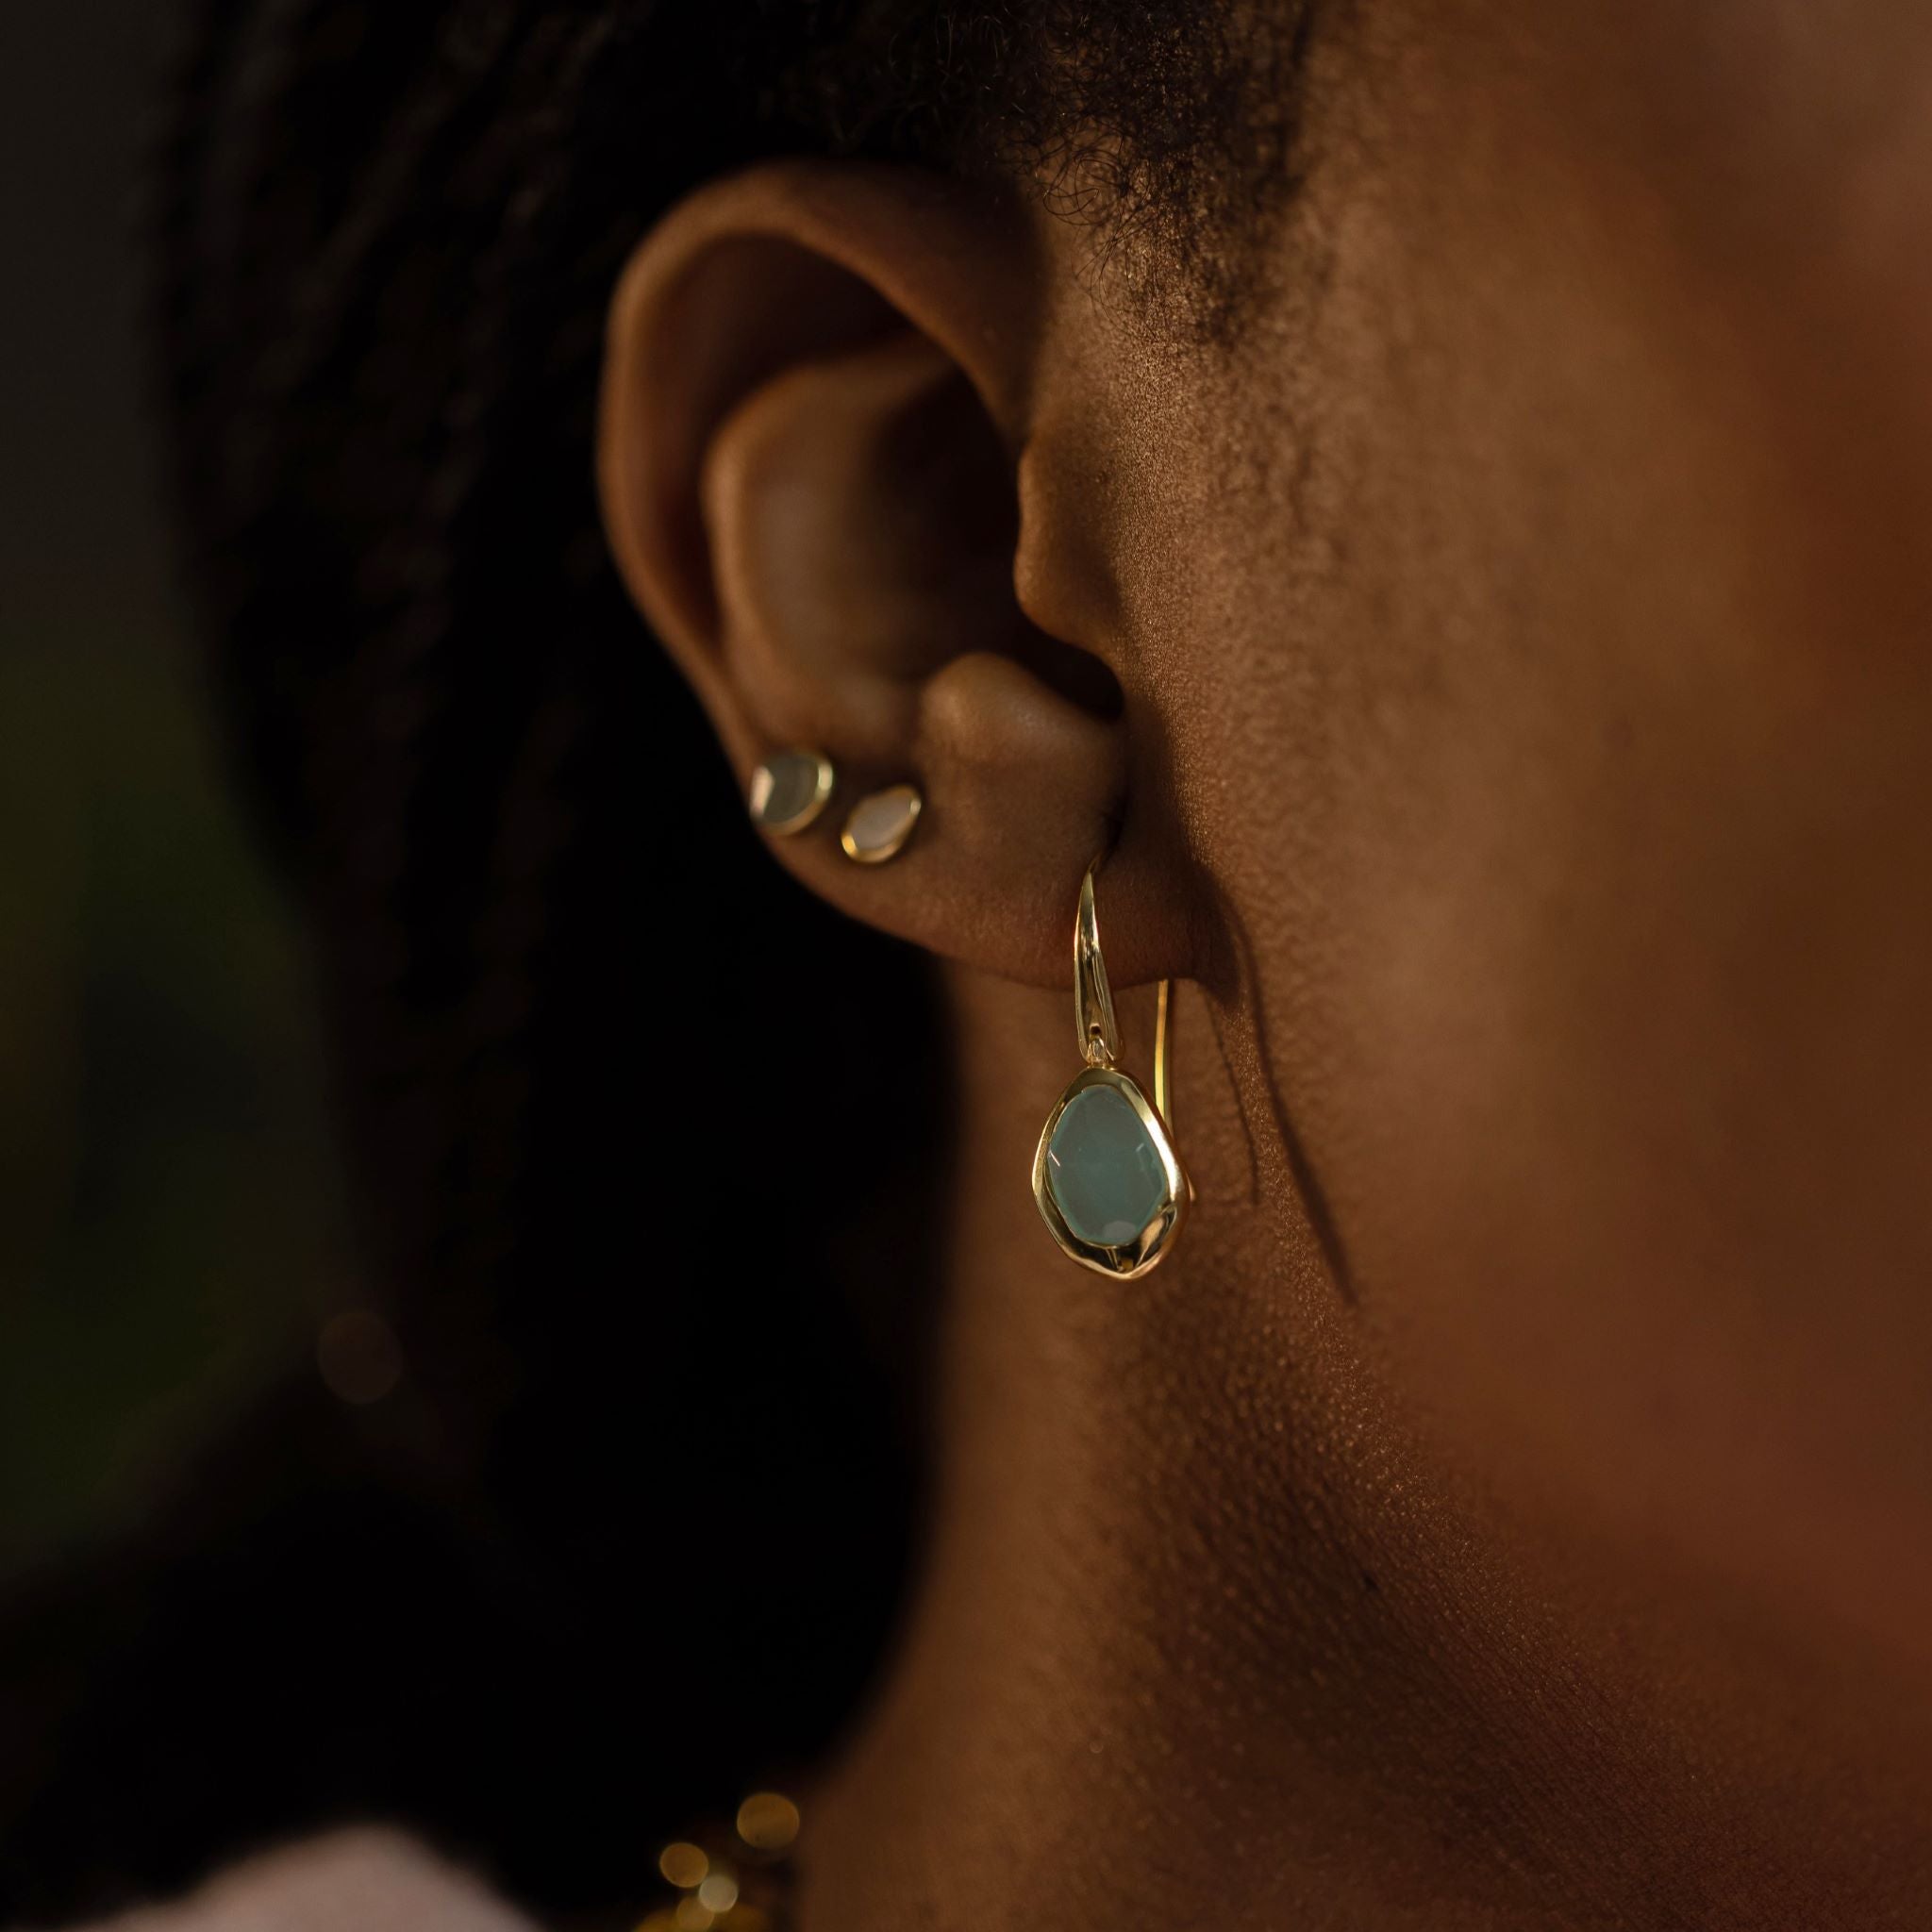 sterling silver and gold vermeil hook earrings in 8 stunning natural handcut gemstones, Aqua Chalcedony,Green Tourmaline,Rose Quartz,Labradorite,Garnet,Iolite,Black Onyx,Moonstone